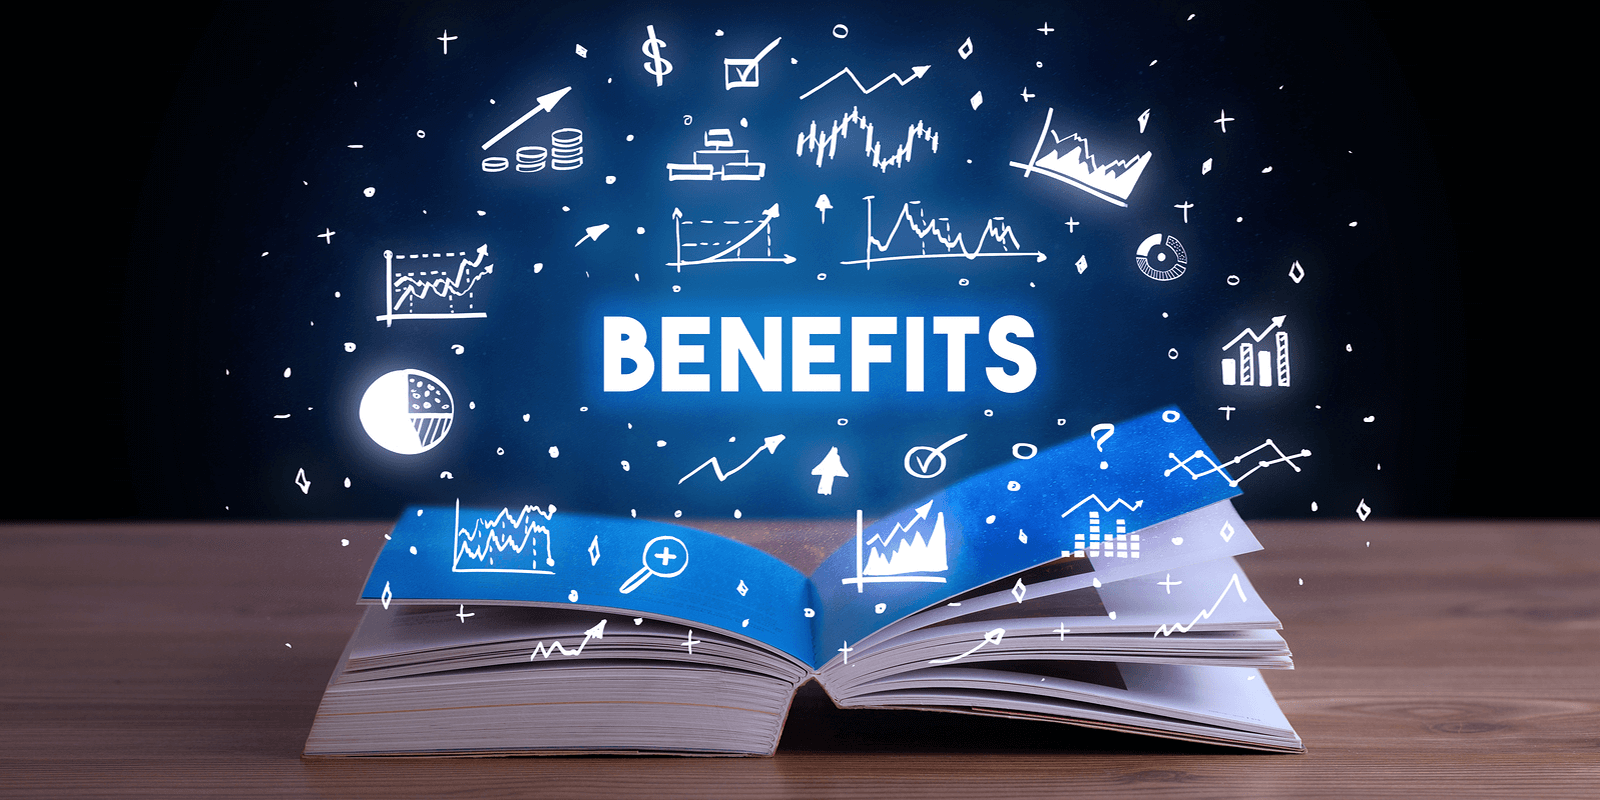 Benefits of FHA Loans